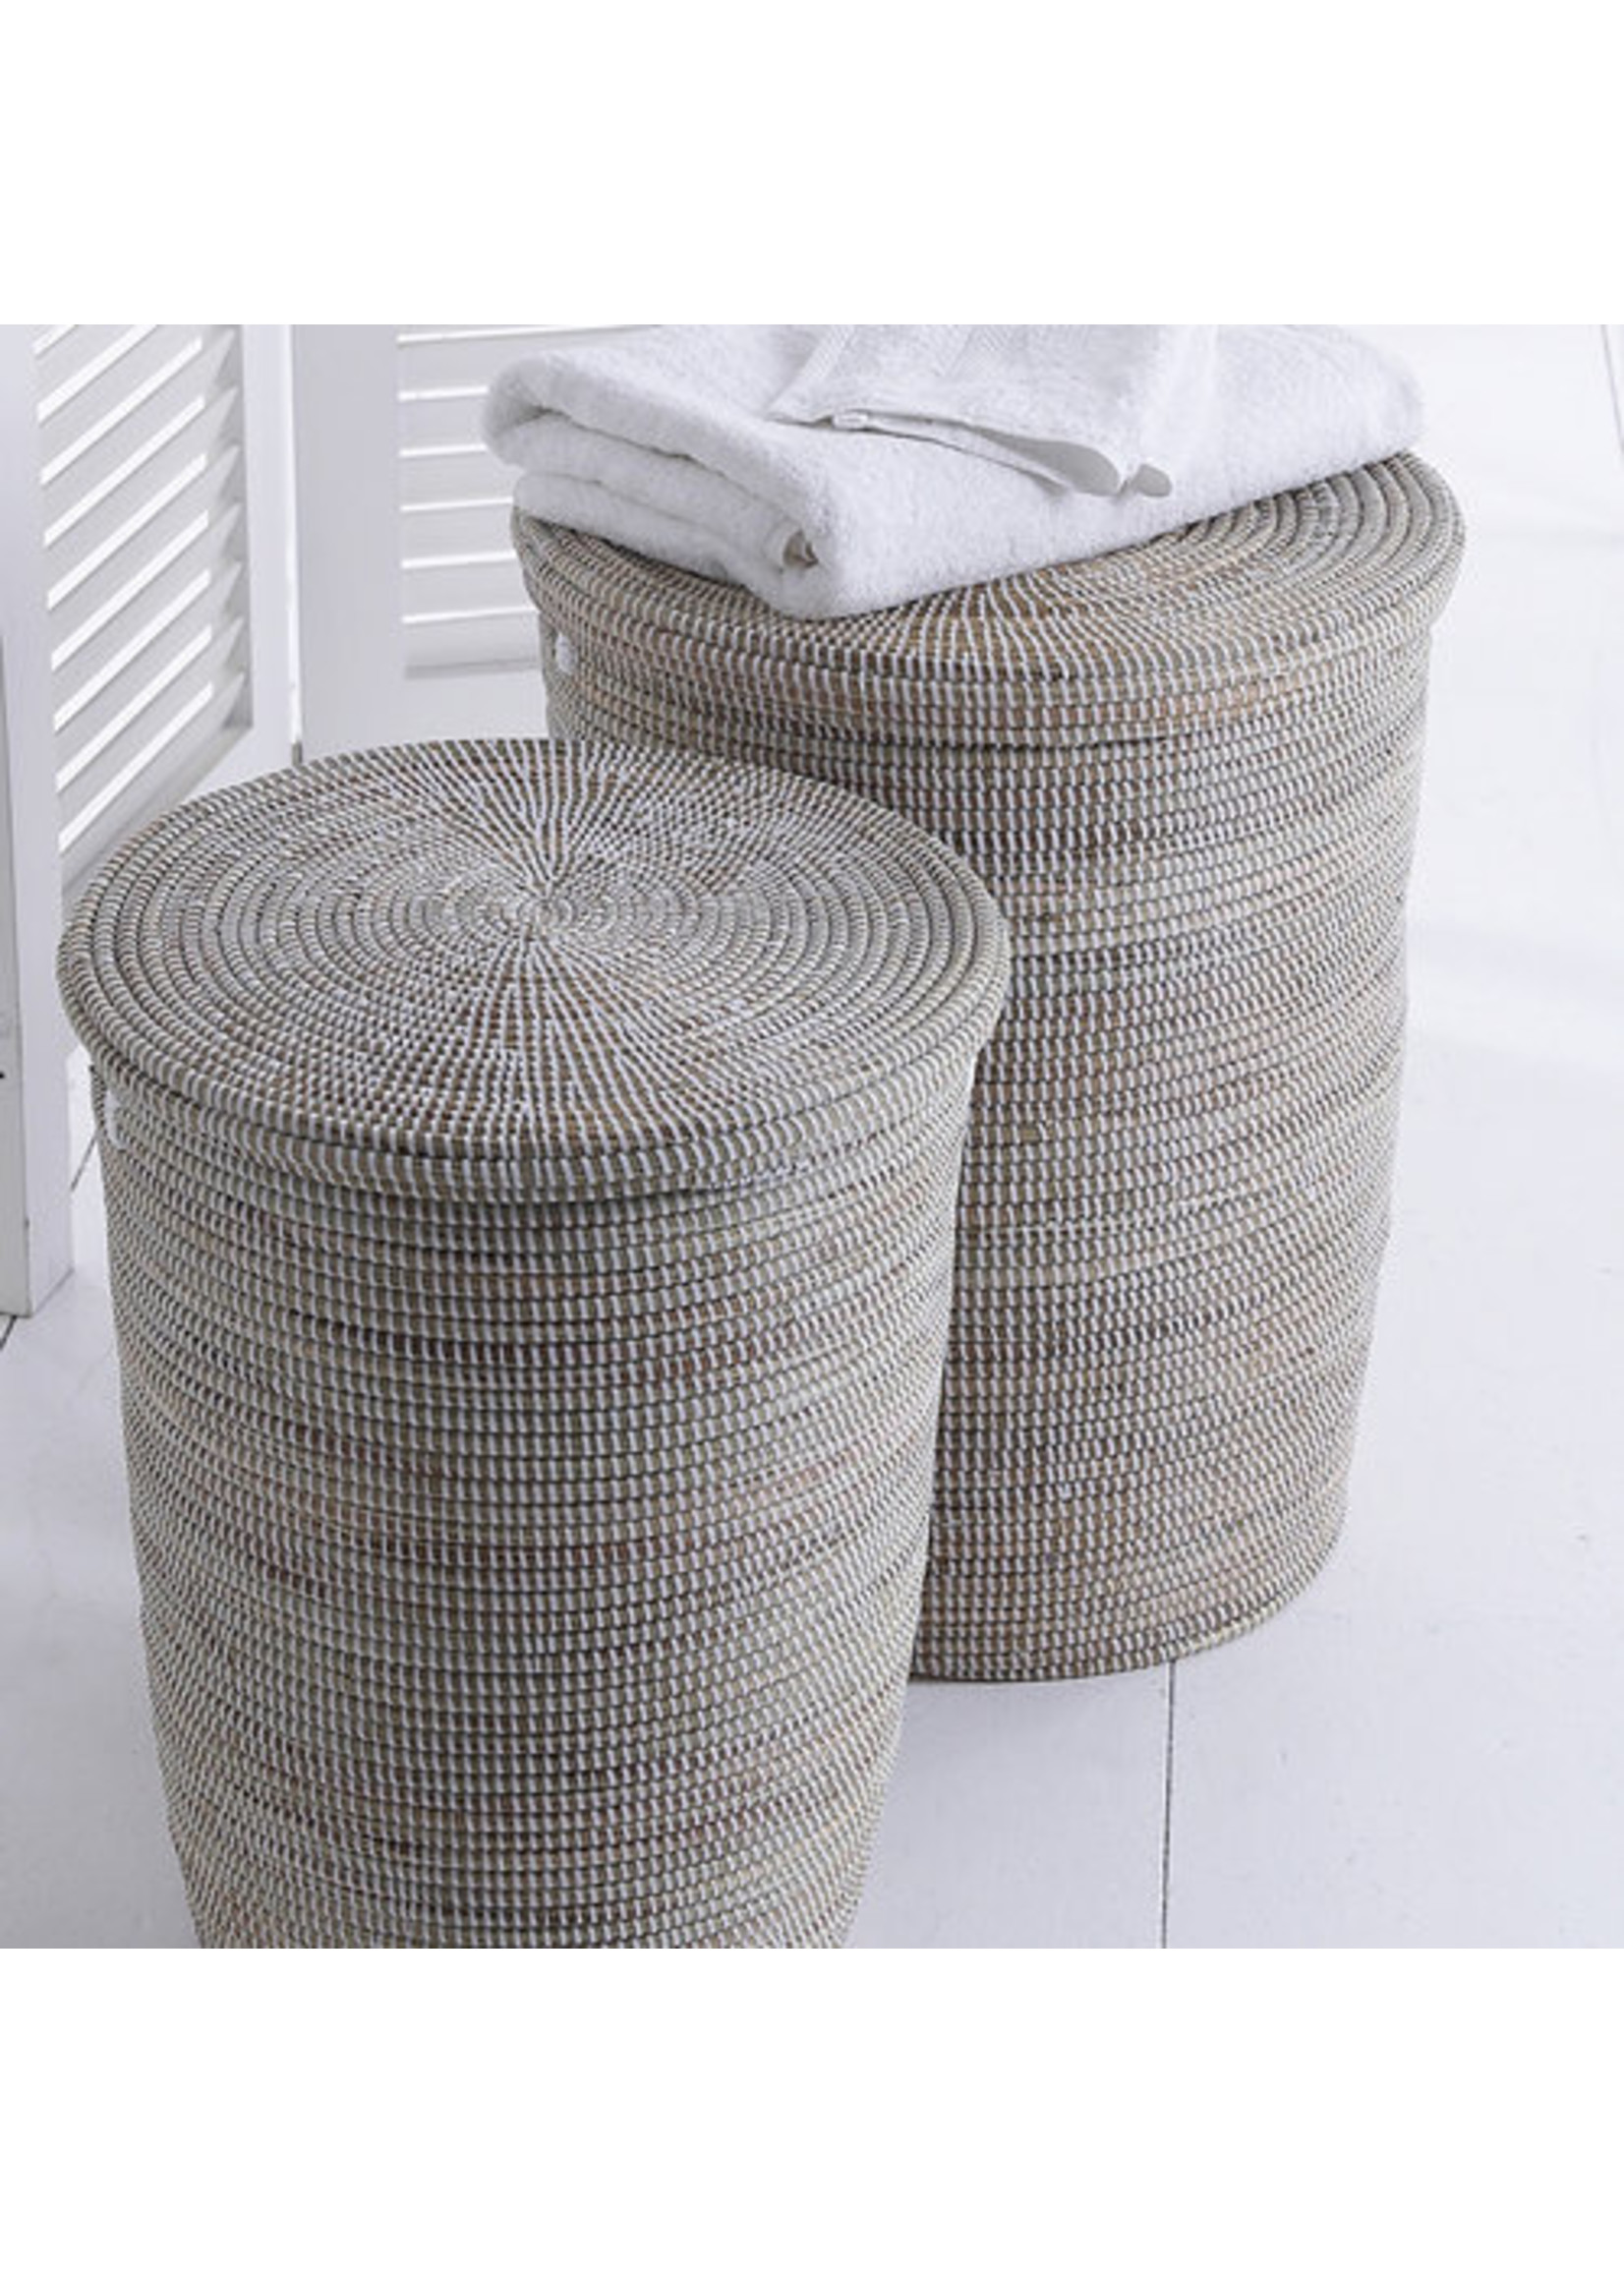 Teranga Basket with flat top white Medium - H32 / D 34cm